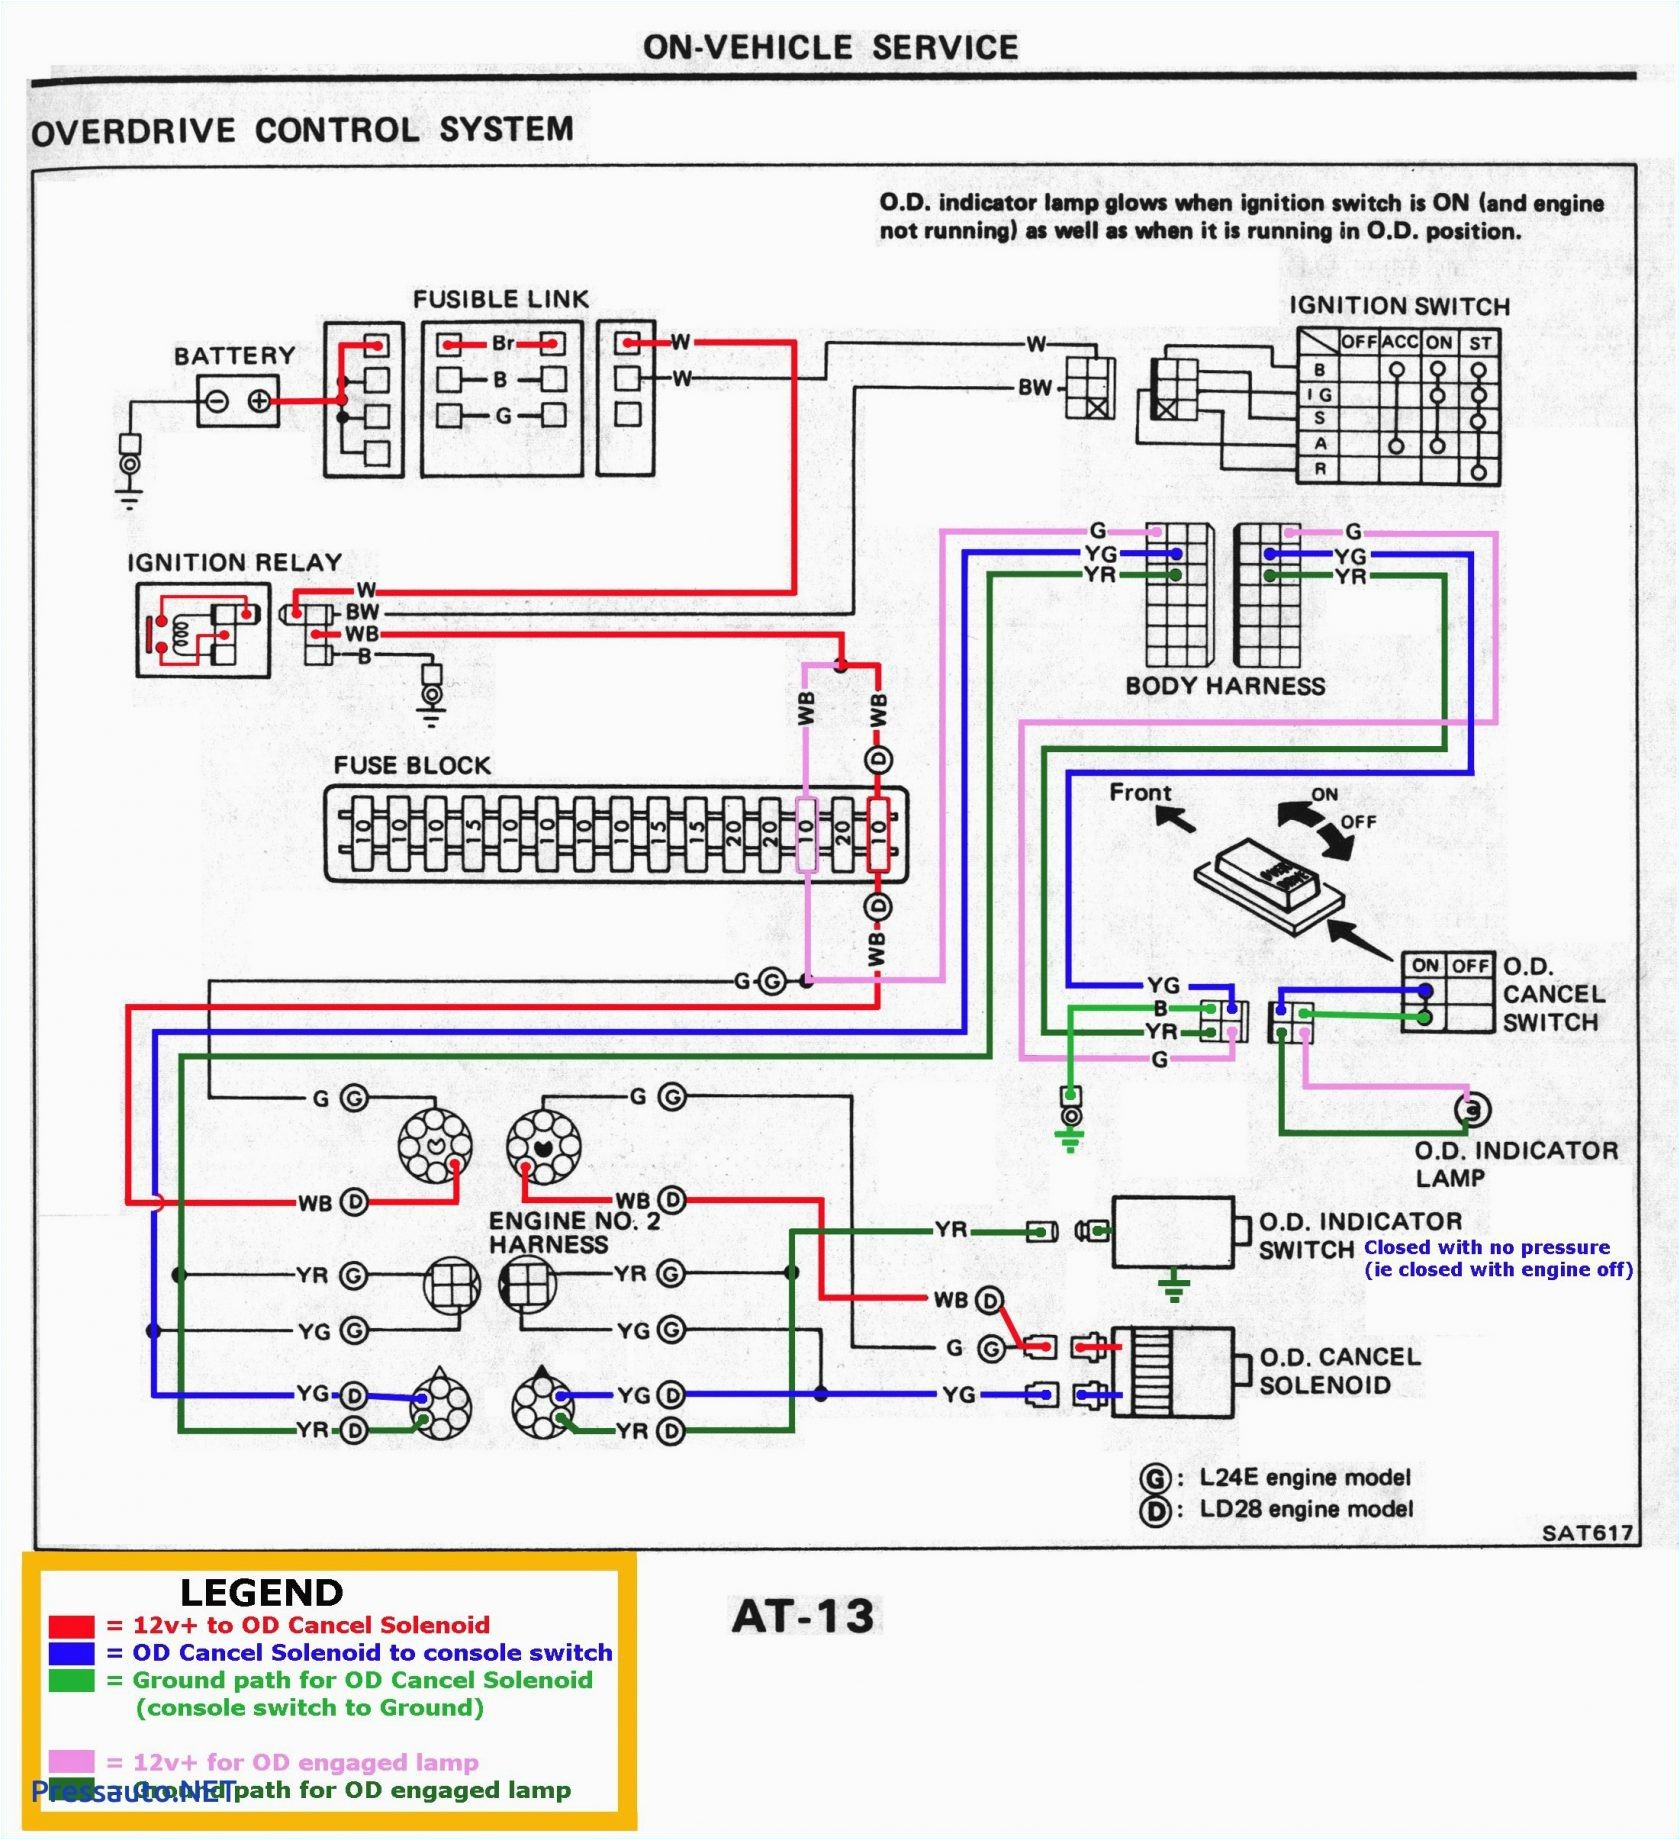 wiring diagram likewise trailer wiring 2009 chevy aveo on chevy aveo wiring diagram in addition ford 7 pin trailer wiring harness likewise